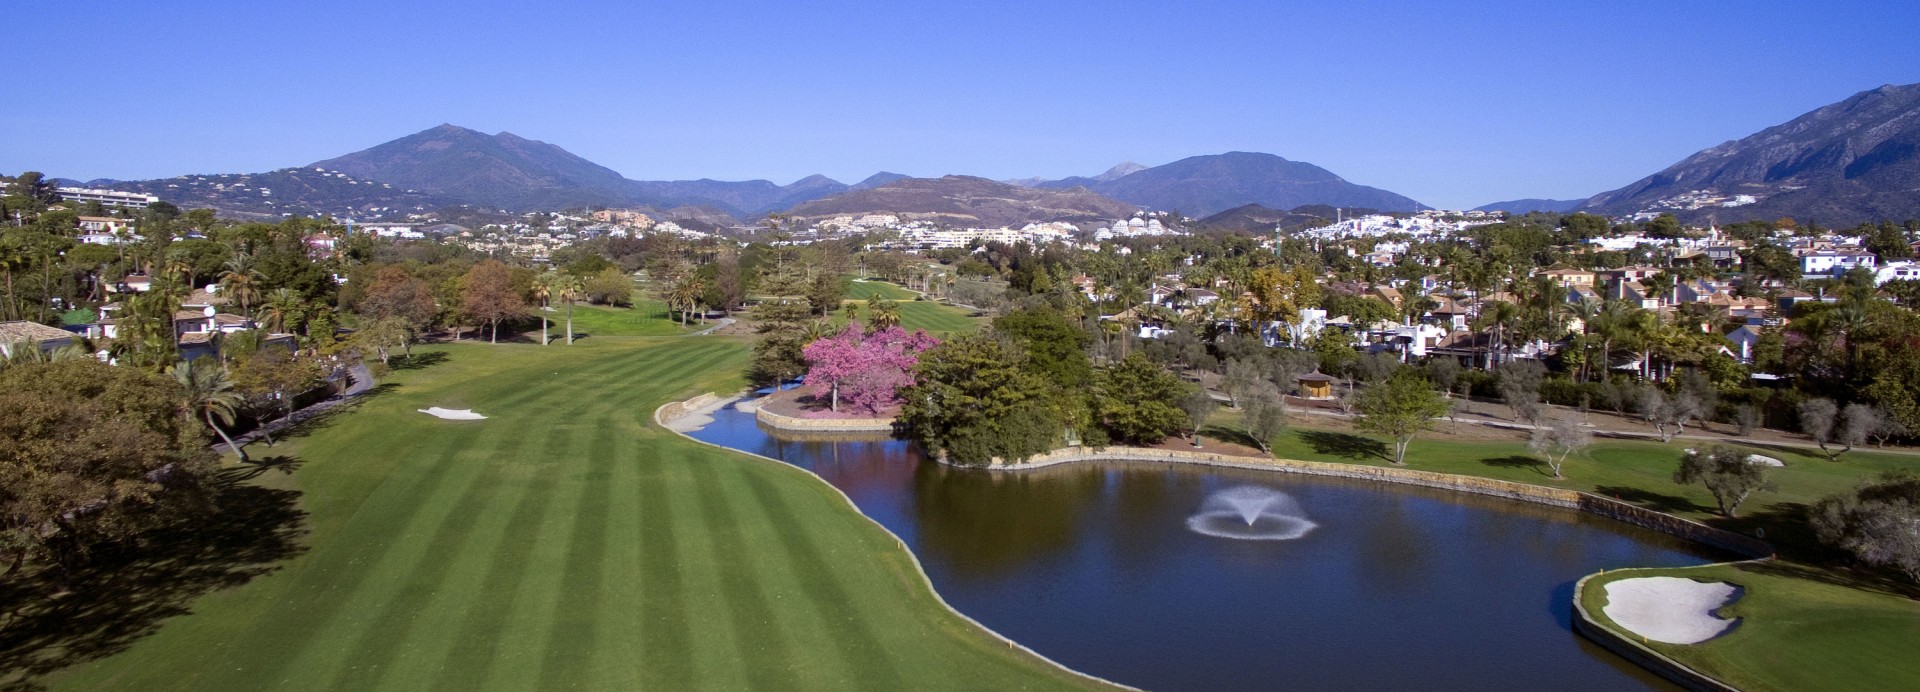 Real Club de Golf Las Brisas  | Golfové zájezdy, golfová dovolená, luxusní golf